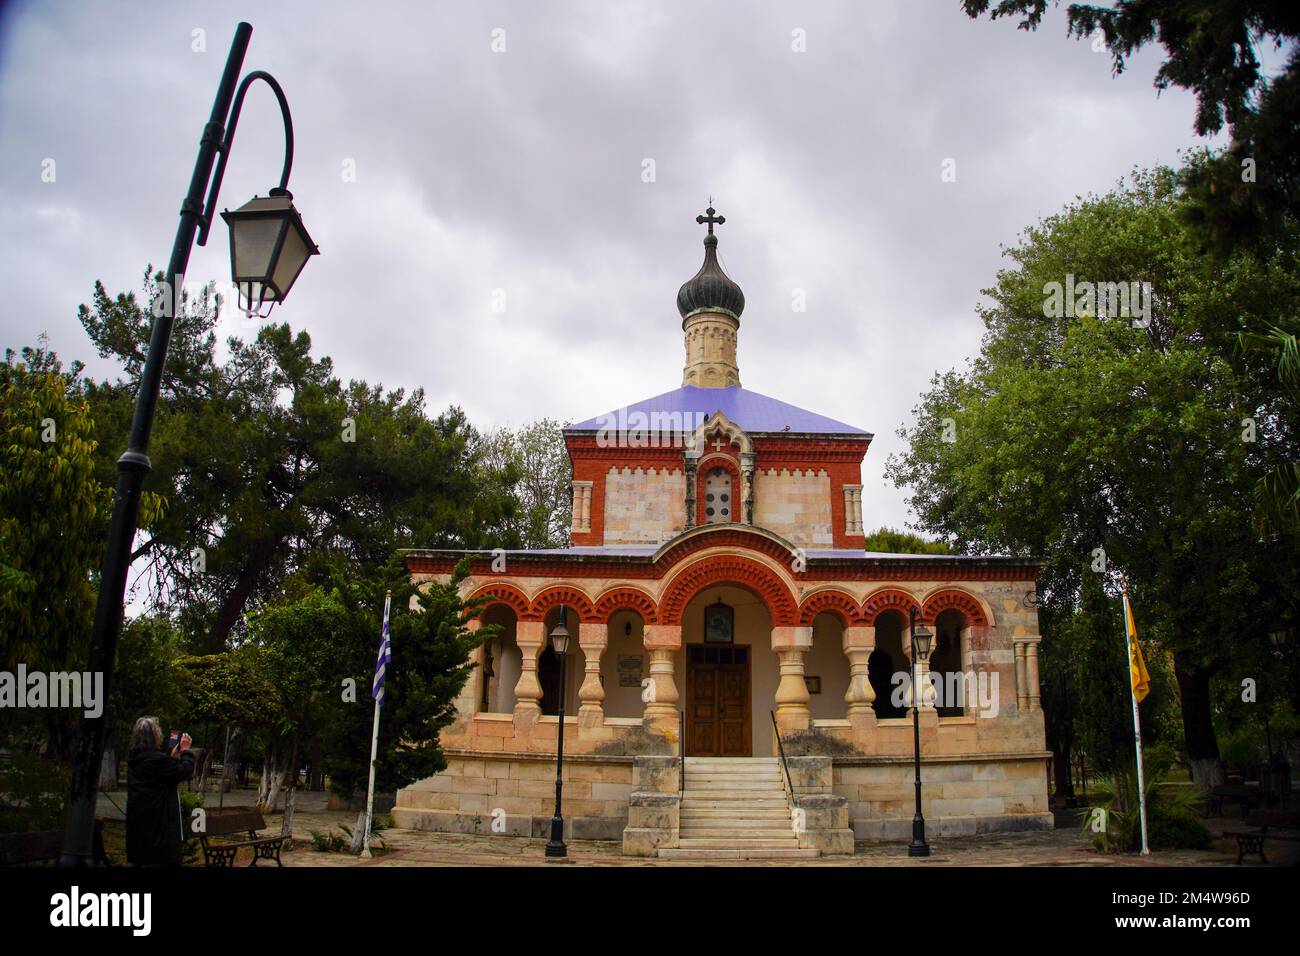 Parish church at Chania, Crete, Greece Stock Photo